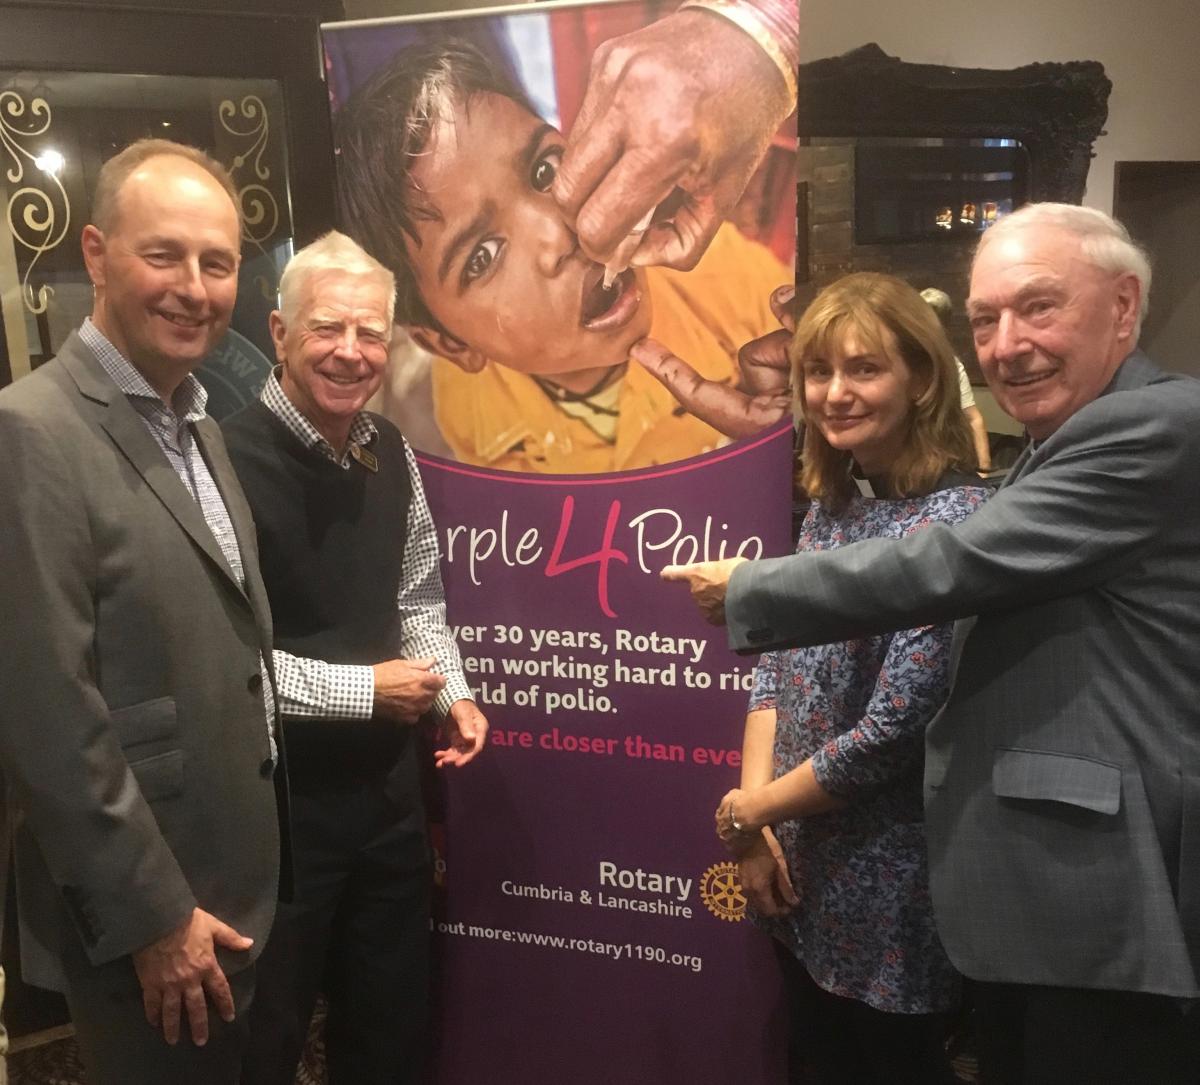 Lytham Rotary celebrates - Rtns Ged and Kevin explain End Polio aim